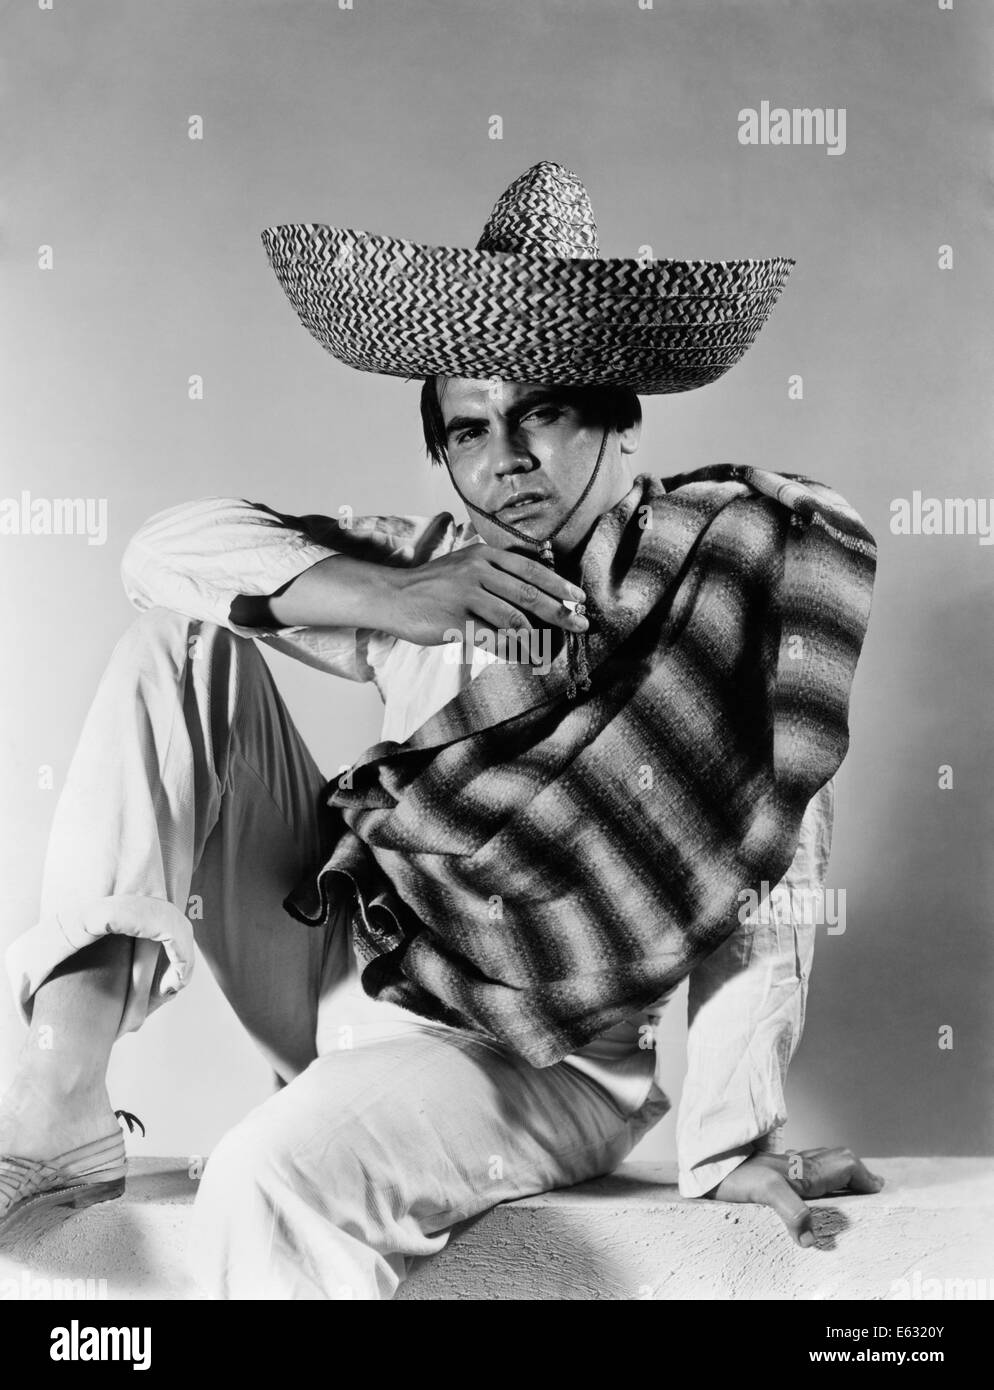 1930s 1940s STEREOTYPE PORTRAIT MEXICAN MAN WEARING STRIPED SERAPE SOMBRERO HAT SMOKING CIGARETTE Stock Photo